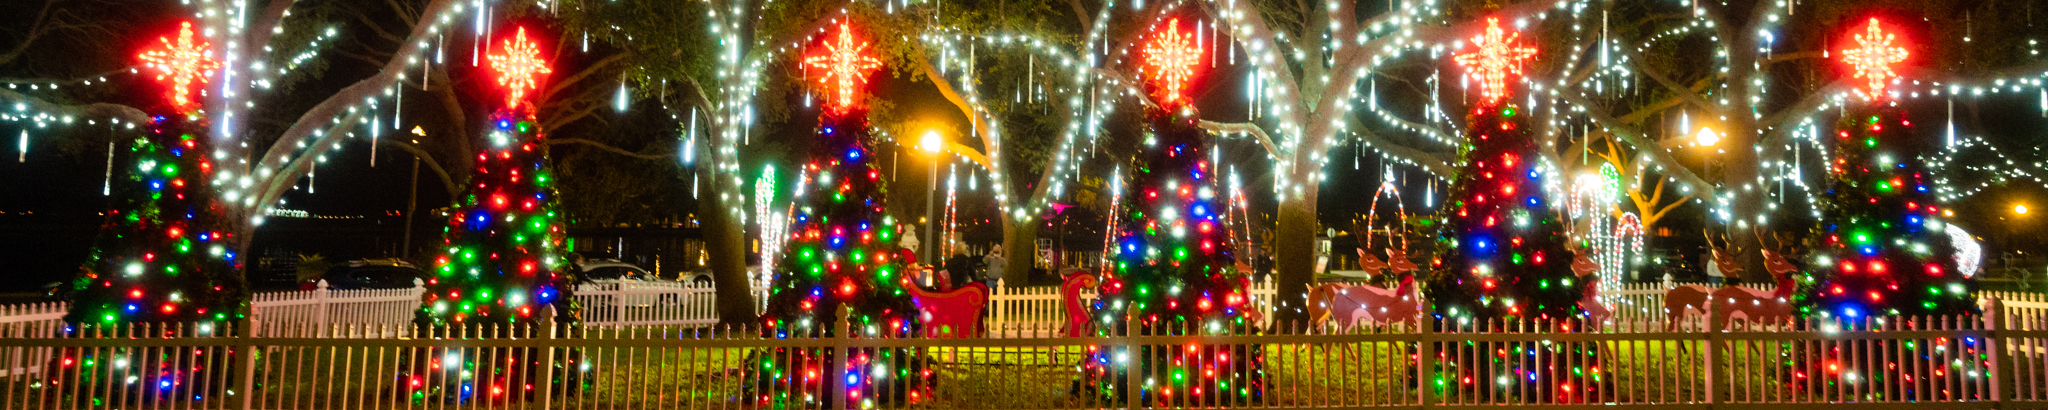 Holiday Lights on trees